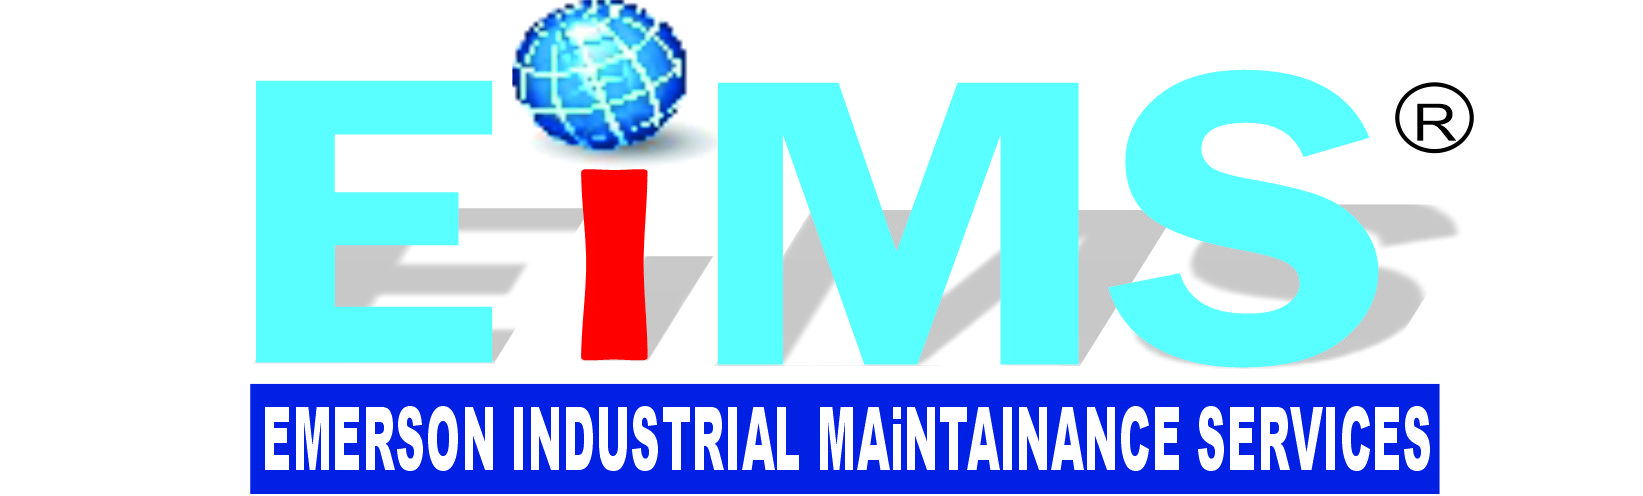 Emerson Industrial Maintenance Services